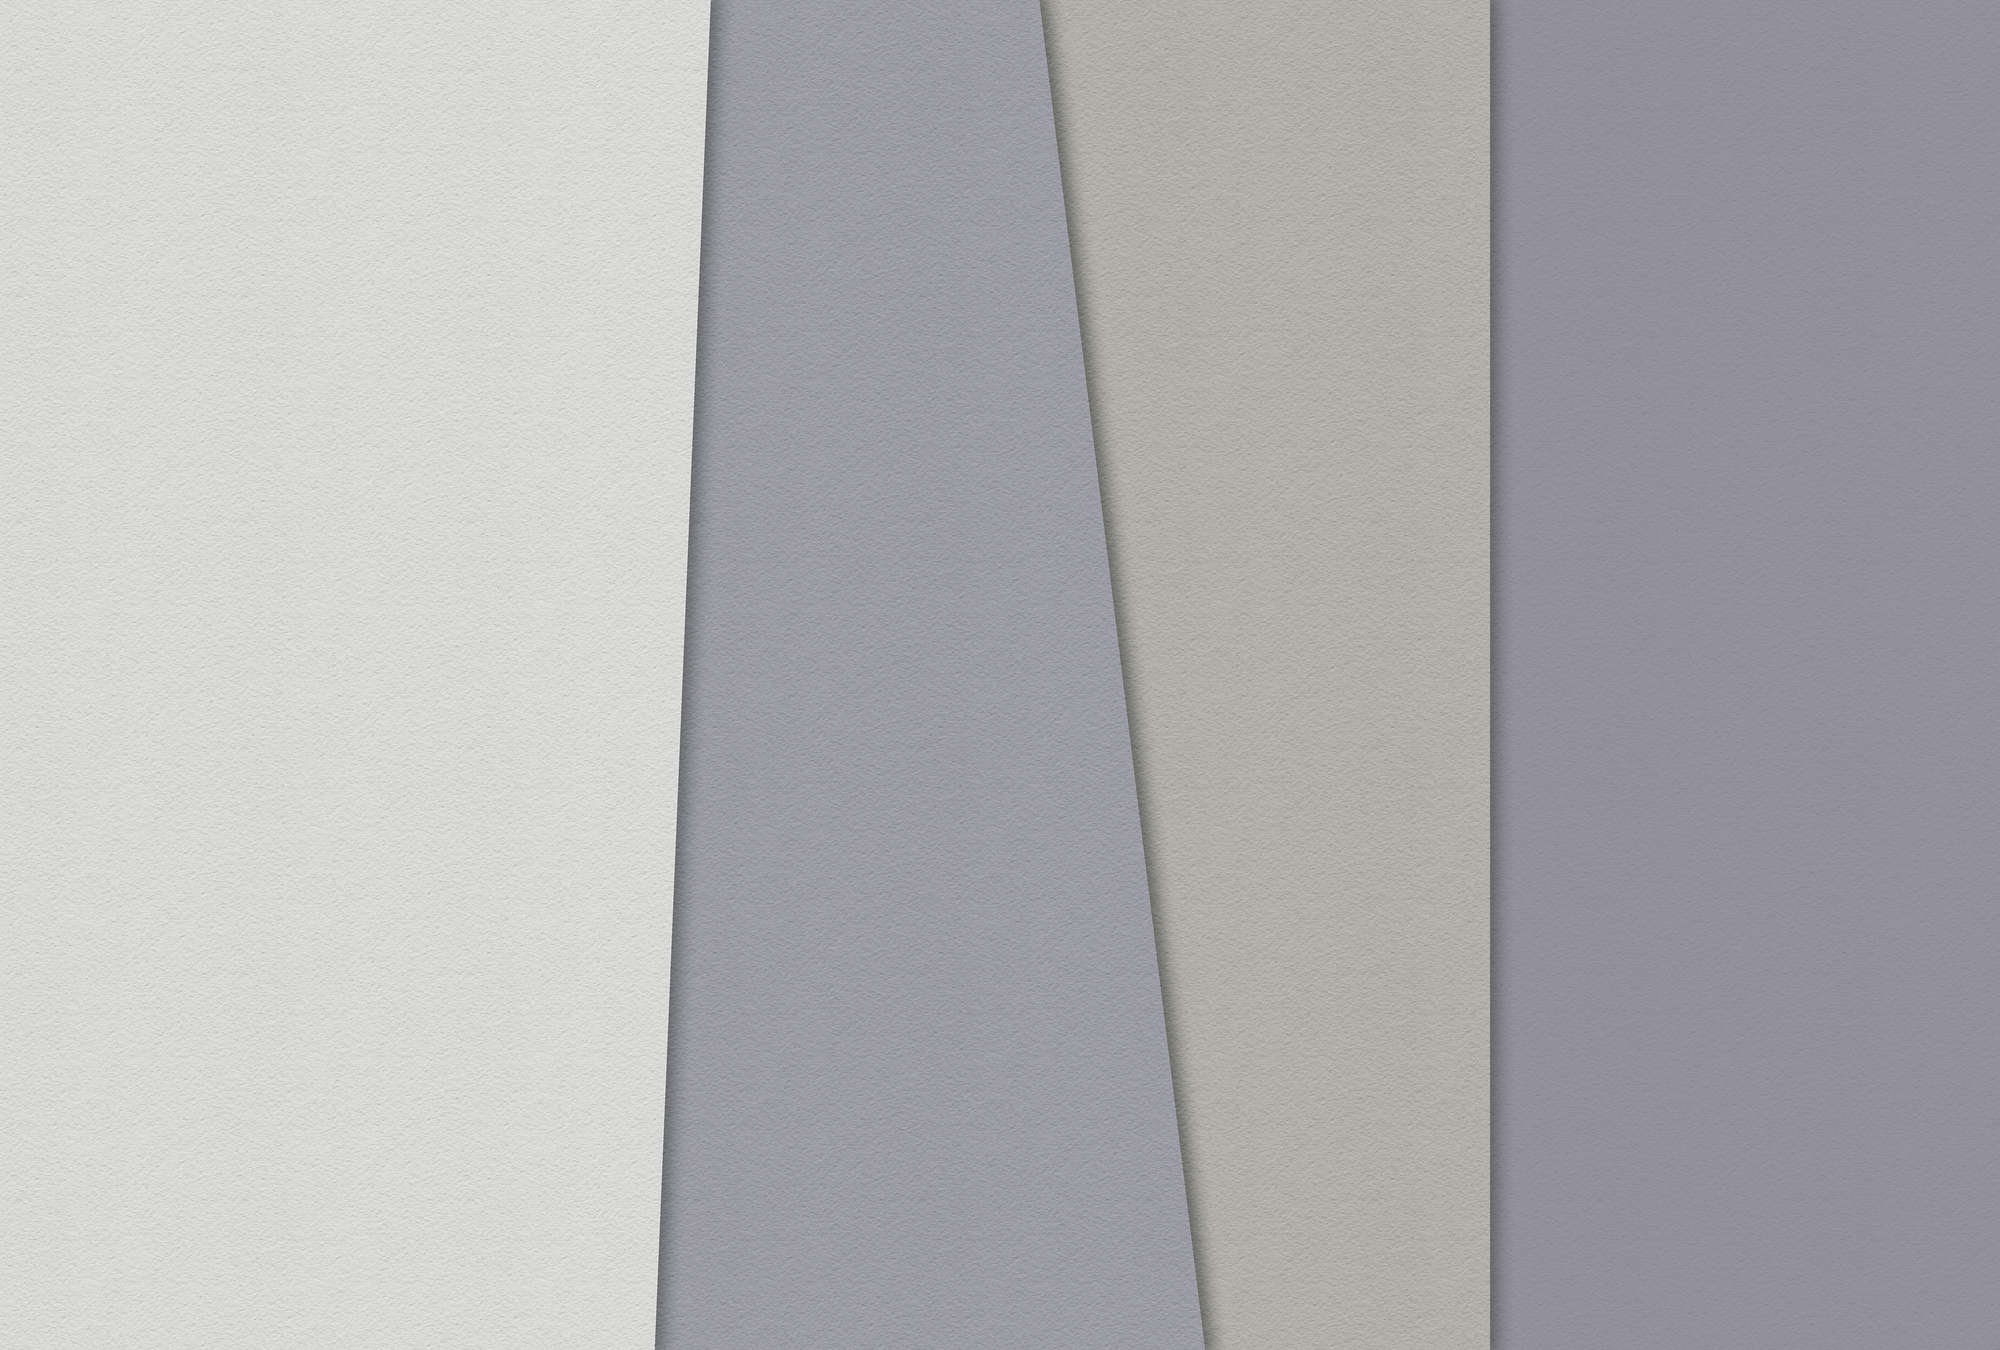             Carta a strati 2 - Carta da parati grafica, carta fatta a mano dal design minimalista - Crema, verde | Pile liscio premium
        